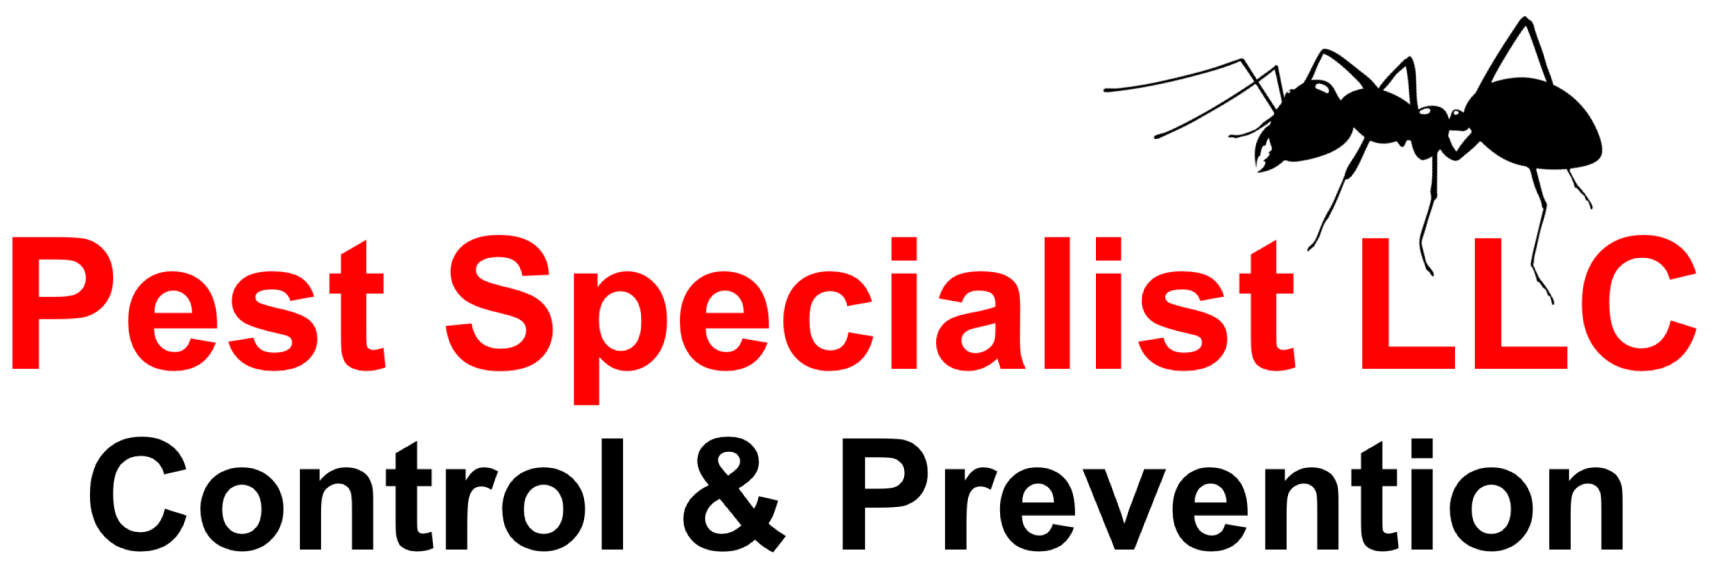 Pest Specialist LLC Logo1